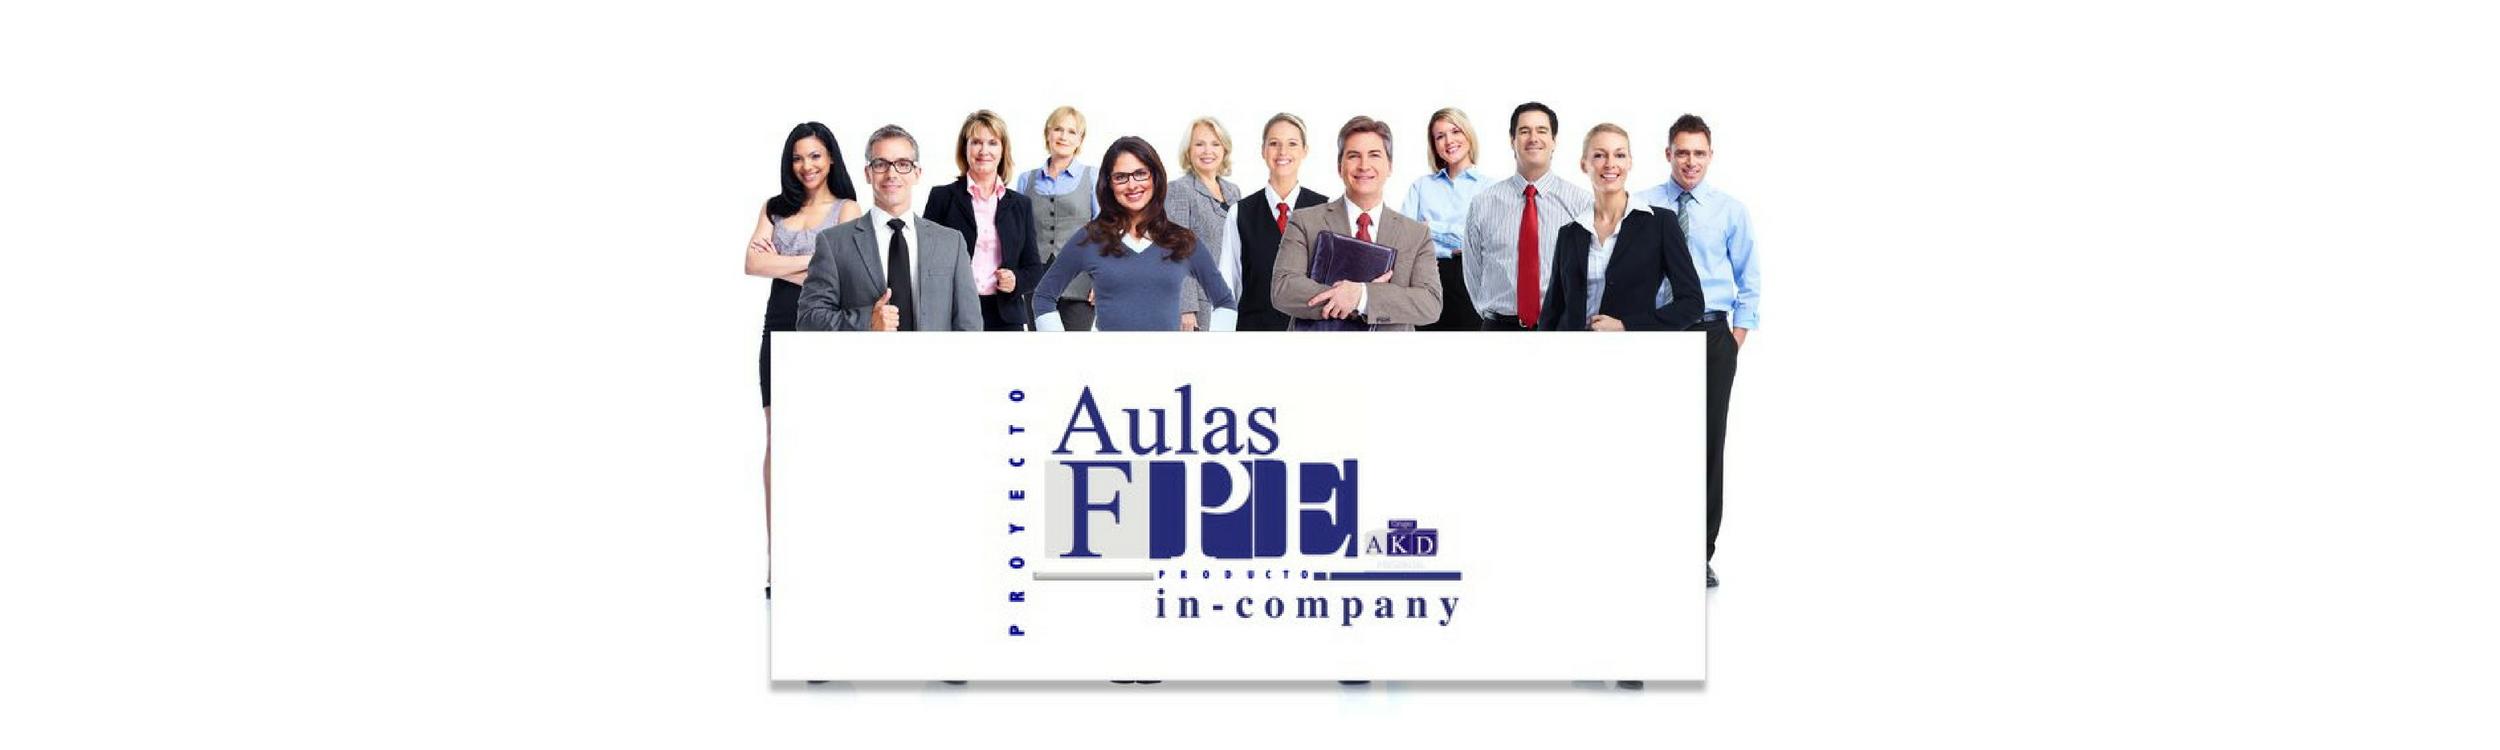 Aulas FPE In-company